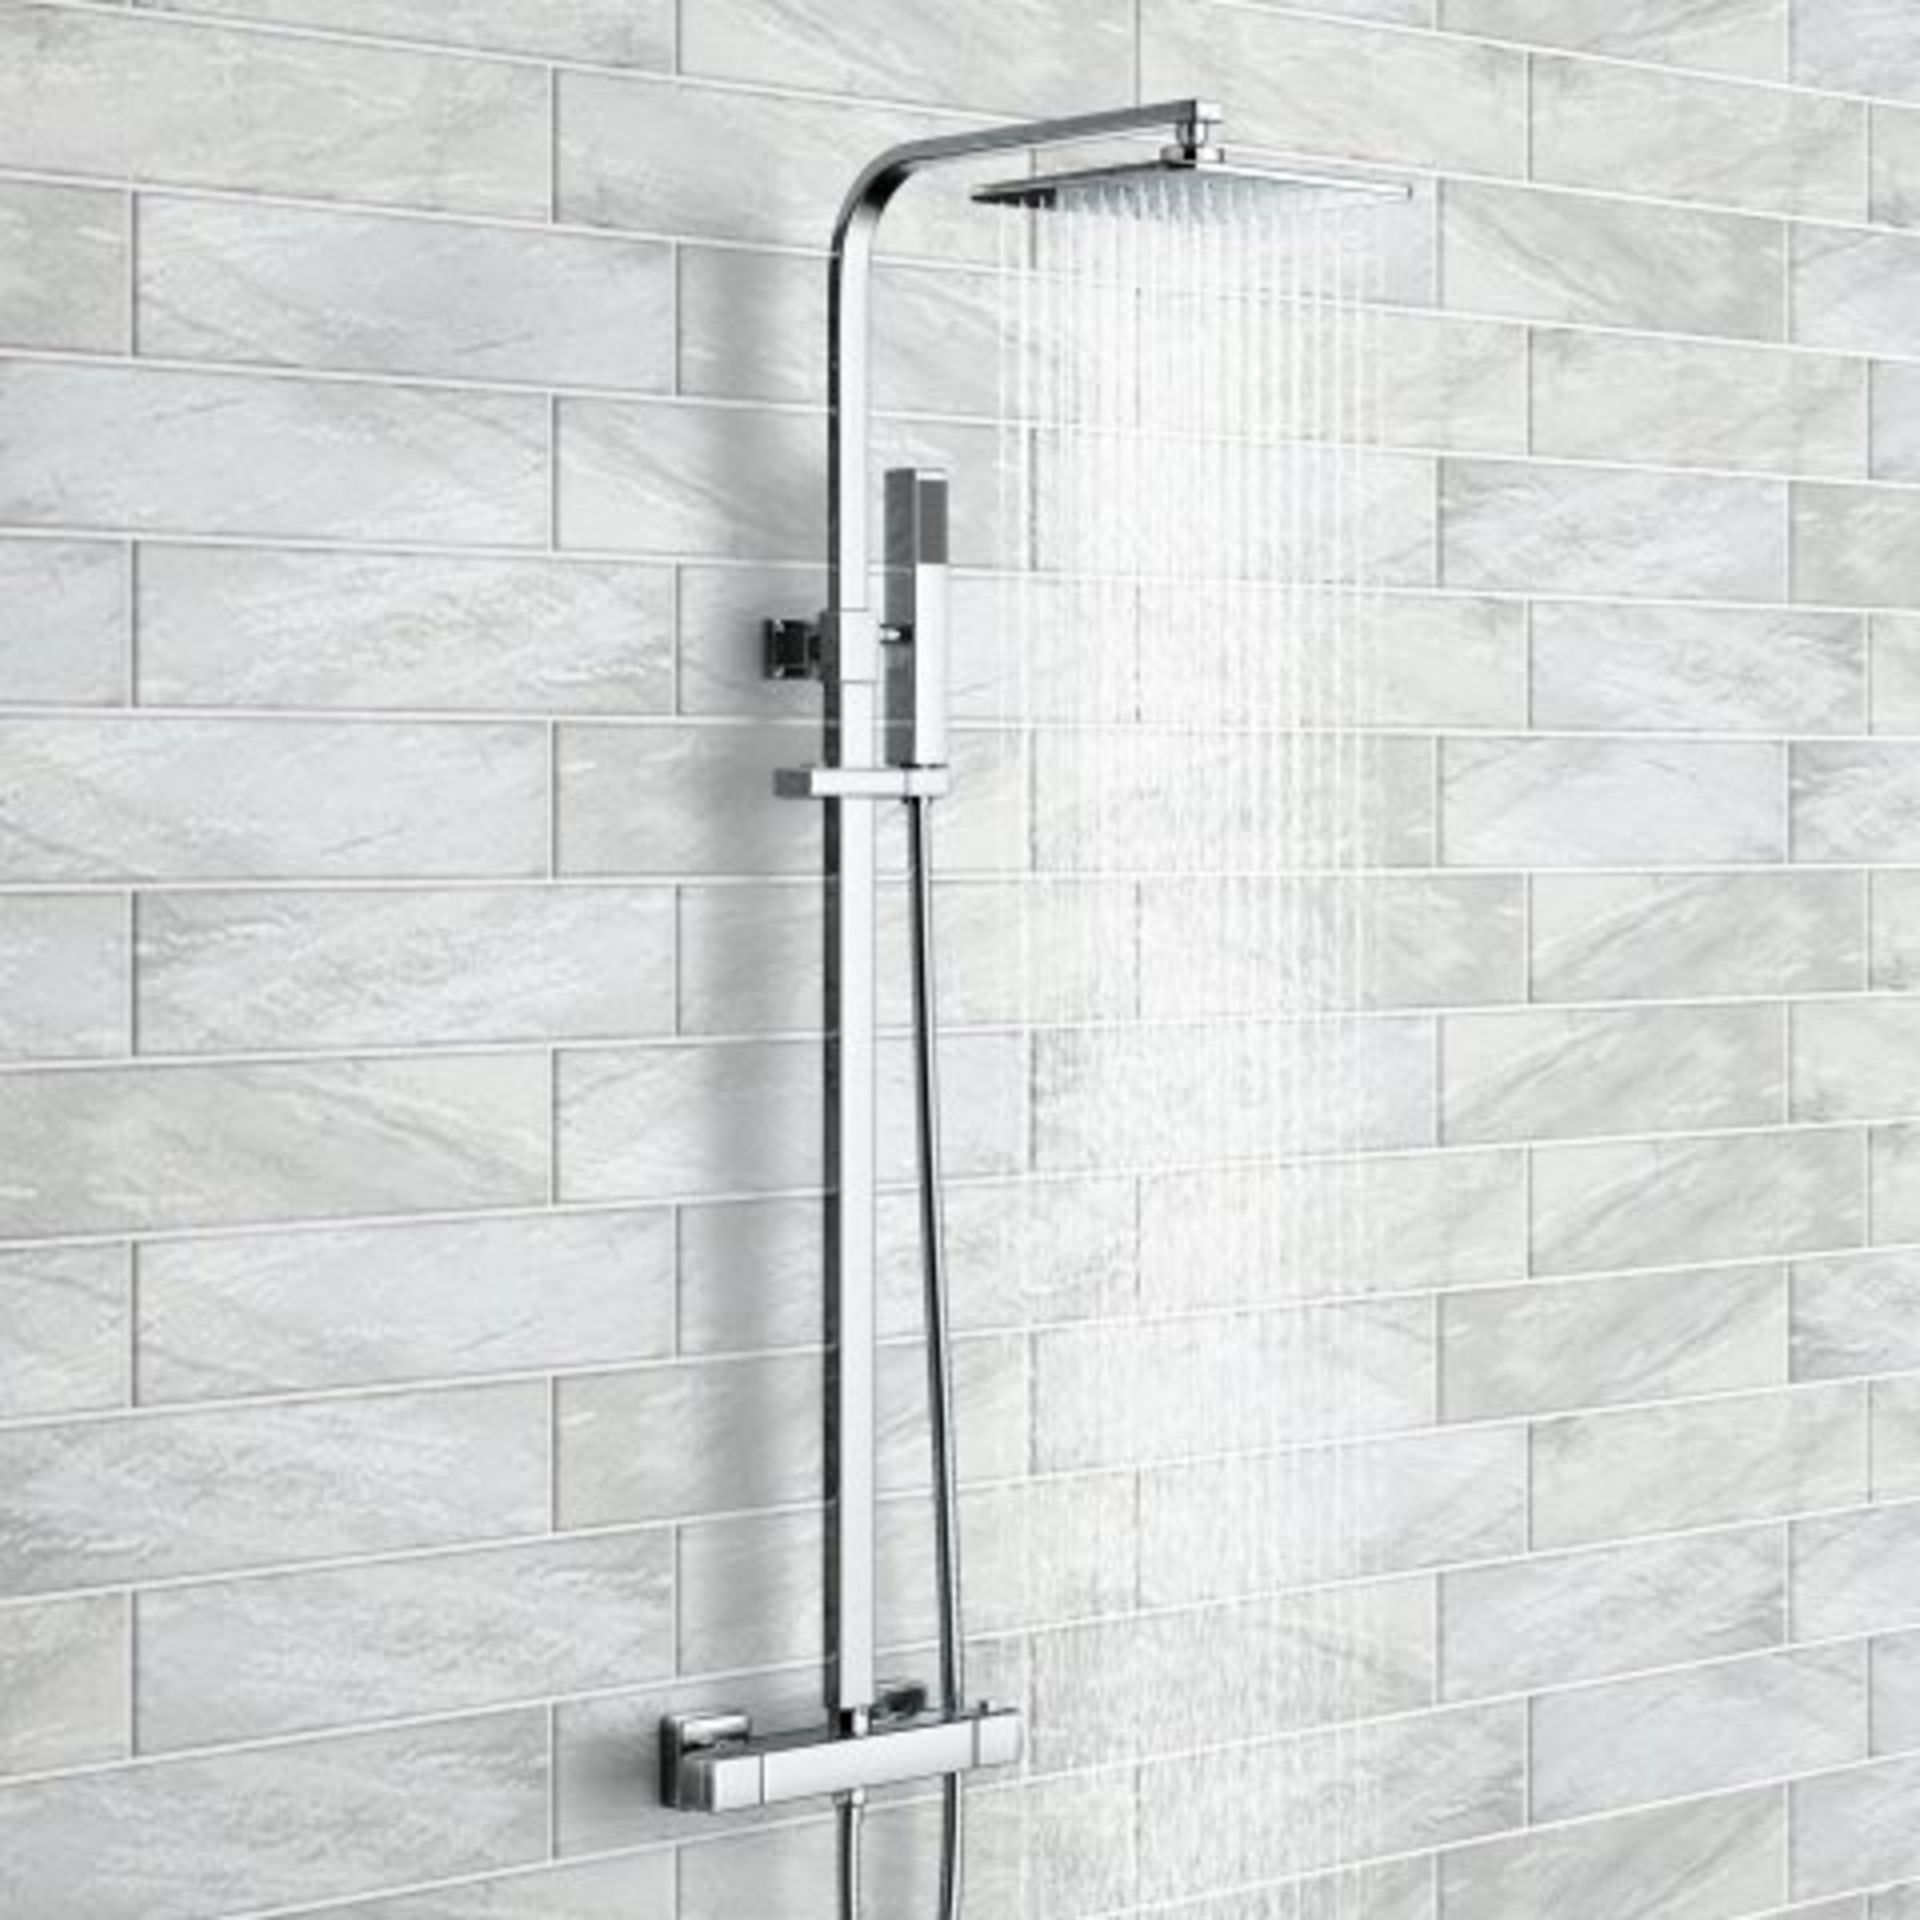 (T206) Square Exposed Thermostatic Shower Kit Slimline Head. Simplistic Style The minimalist